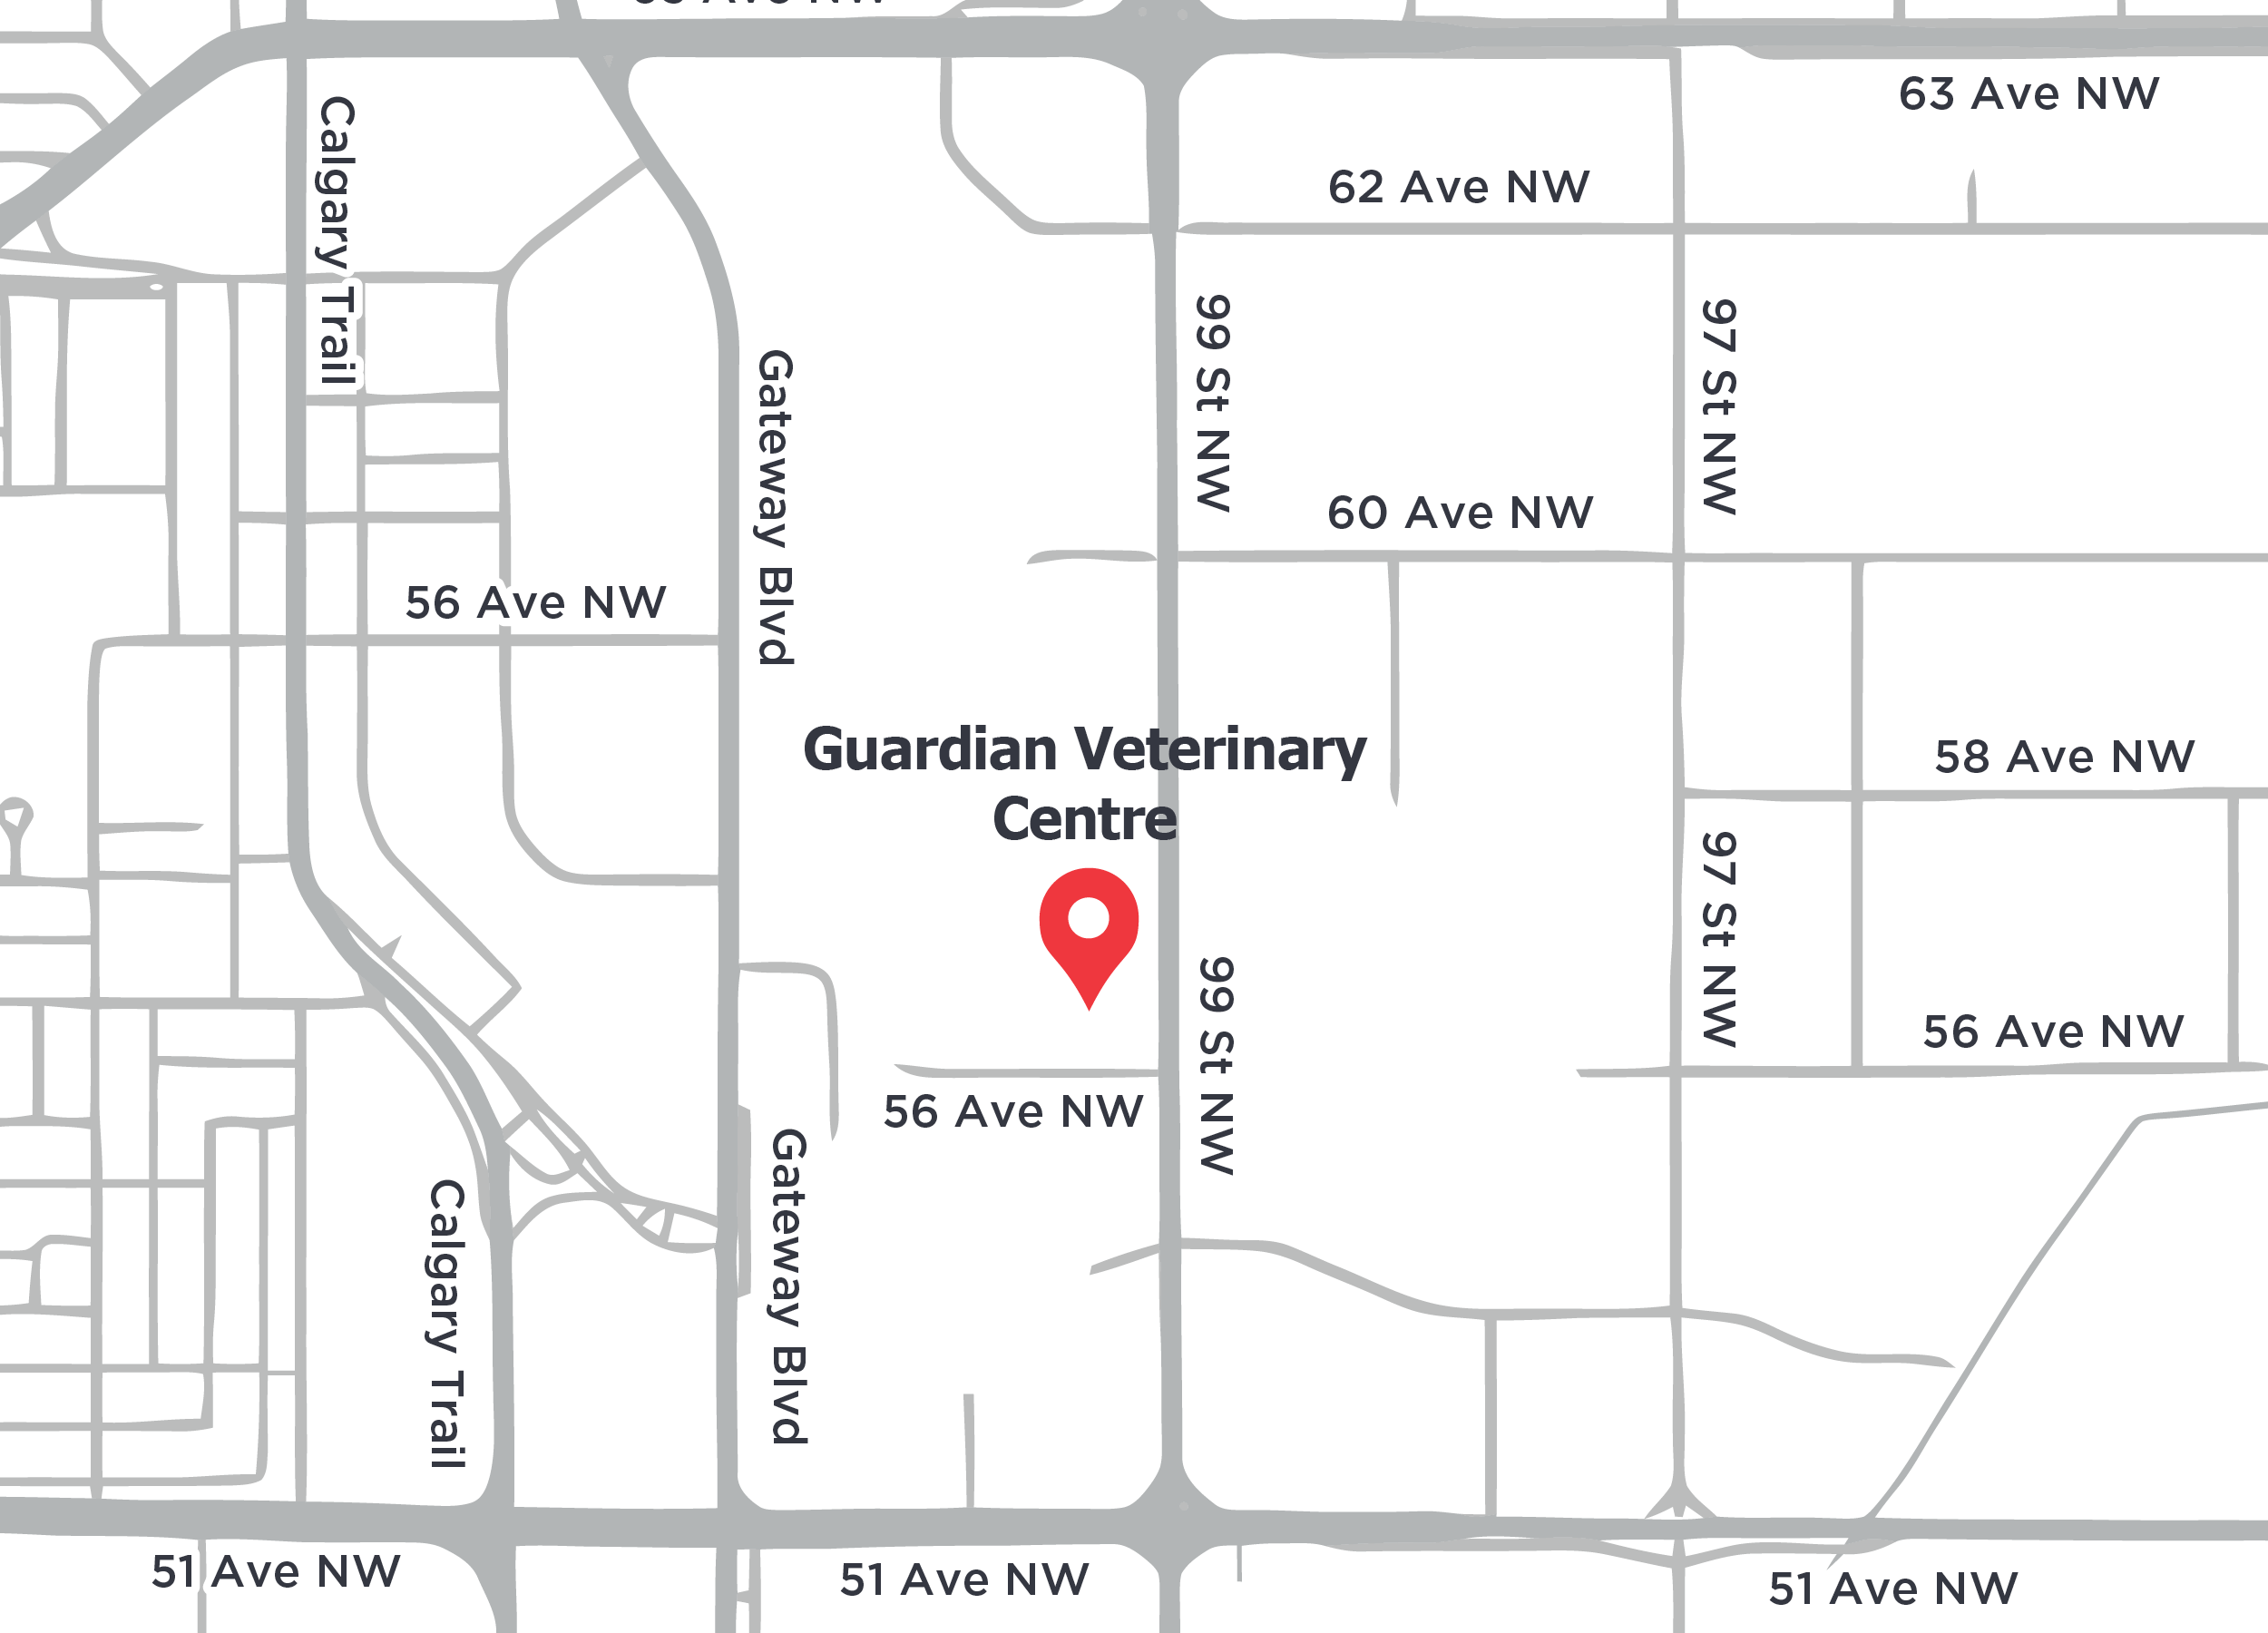 Guardian Veterinary Centre